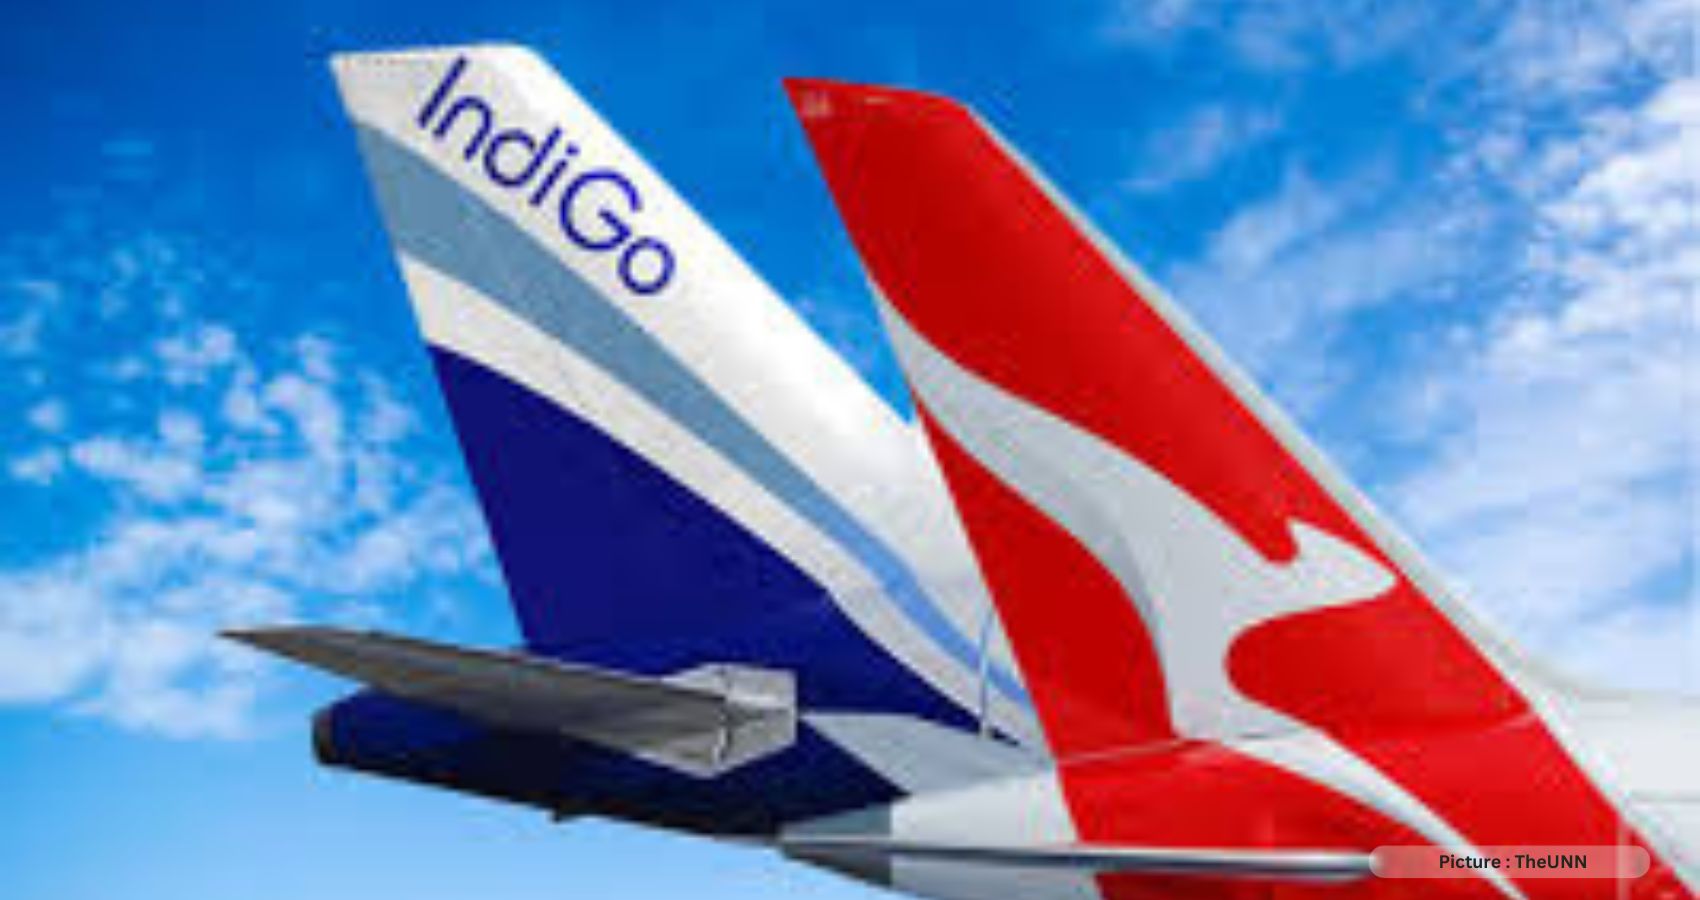 Featured & Cover Indigo And Qantas To Extend Codeshare Partnership 2